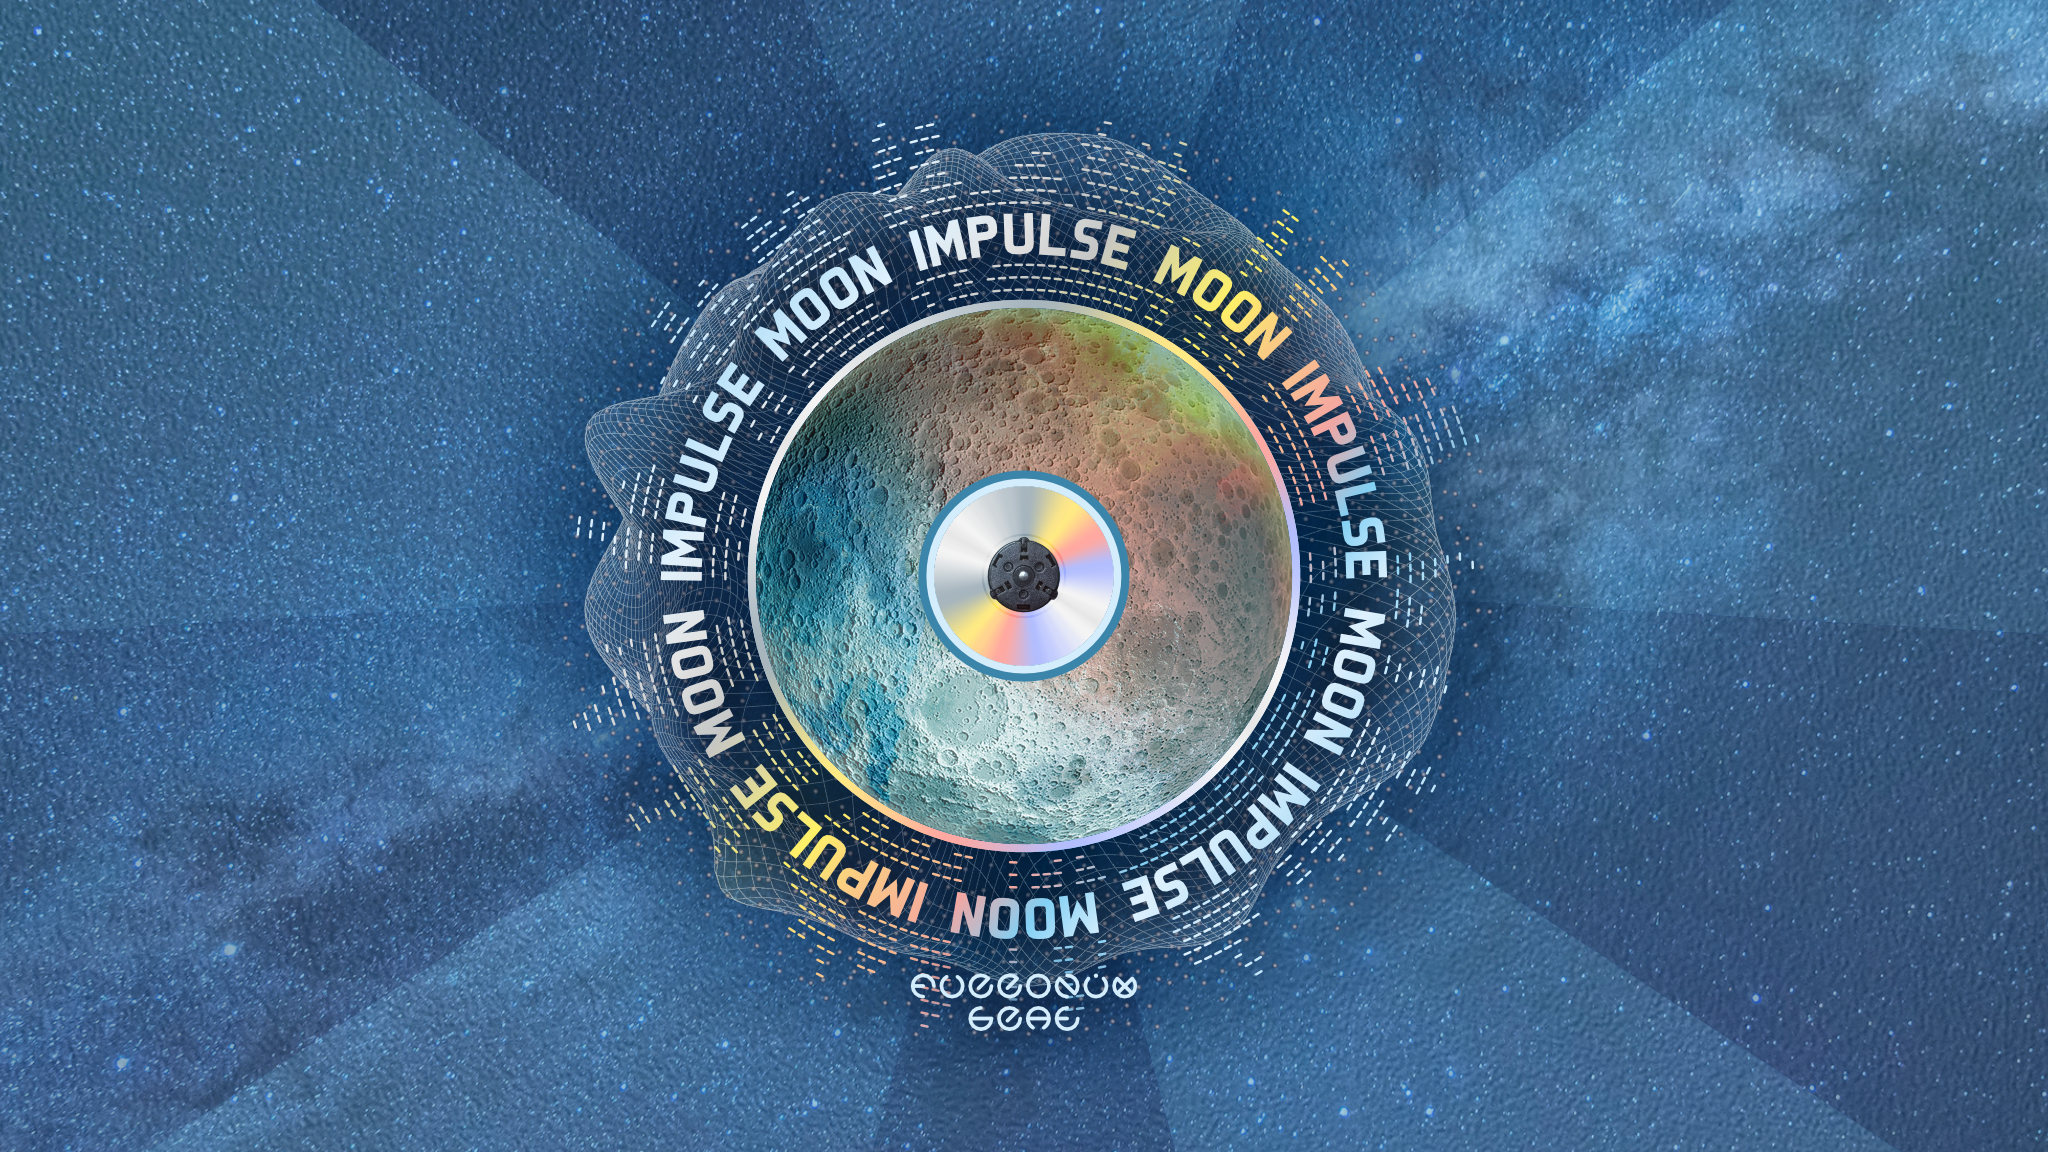 fleeonix - Impulse Moon 🌕 (drum, bass, beat, electro music)